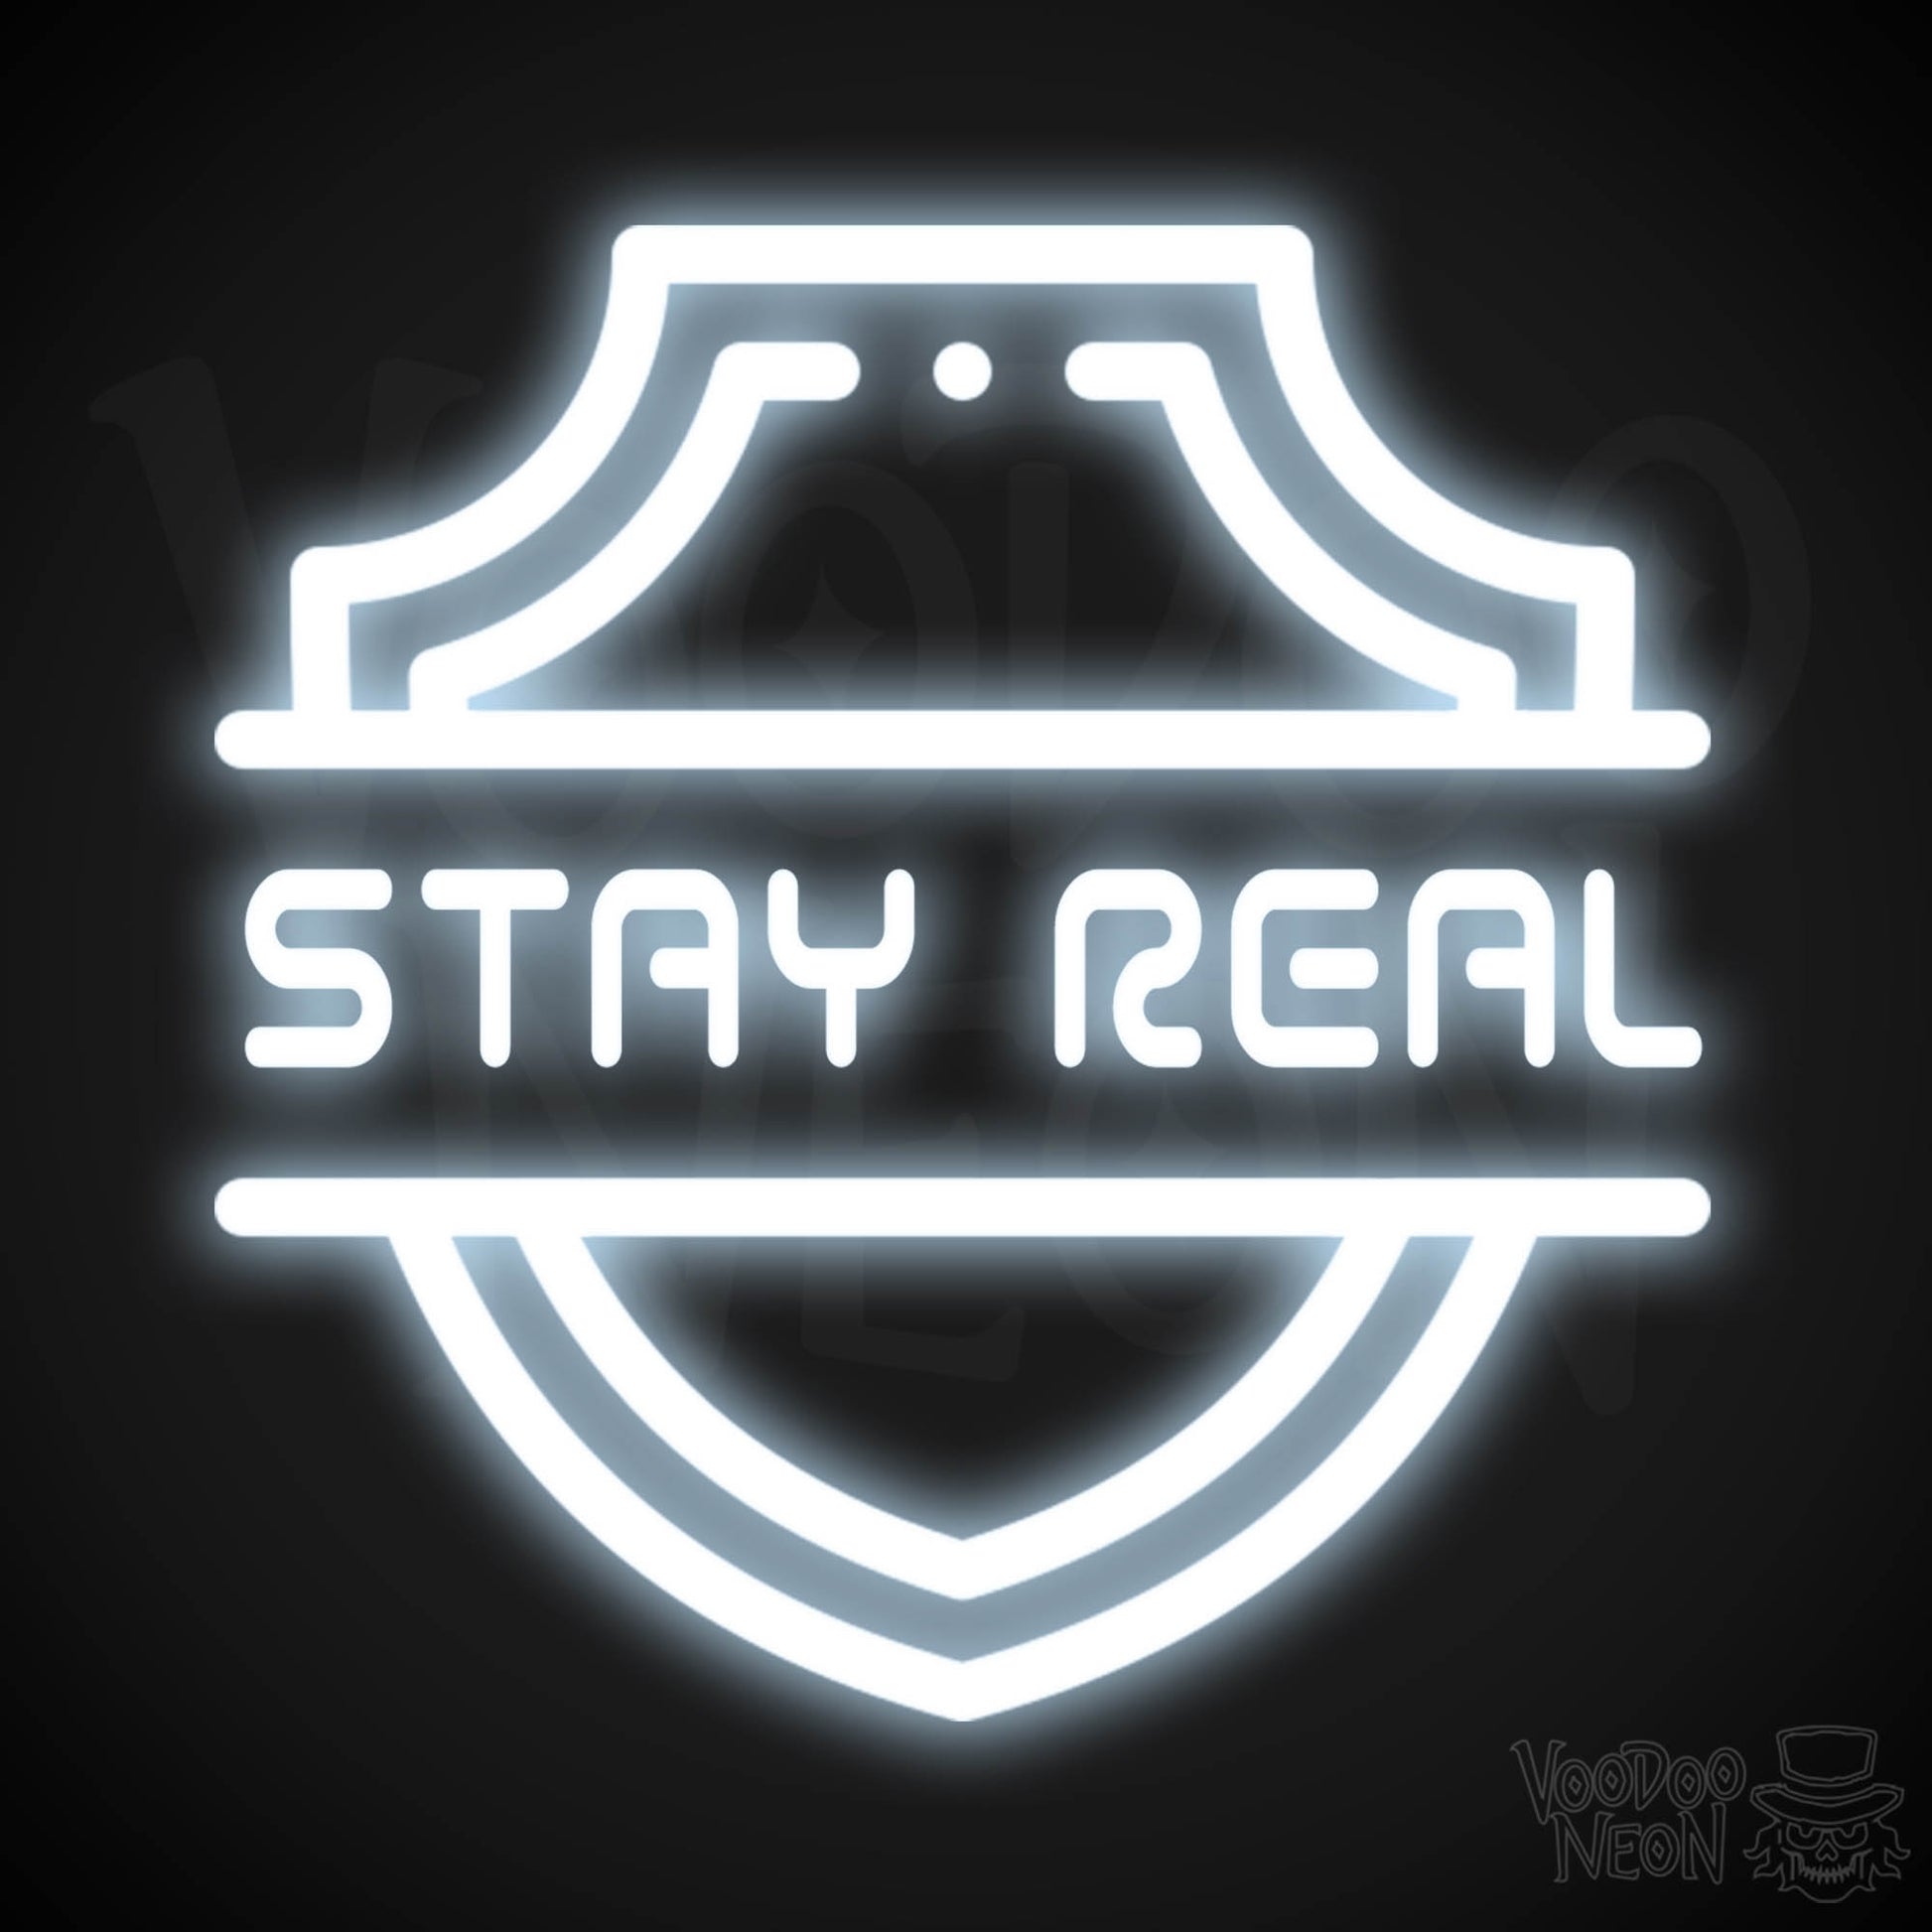 Stay Real Neon Sign - Neon Stay Real Sign - Neon Wall Art - Color Cool White